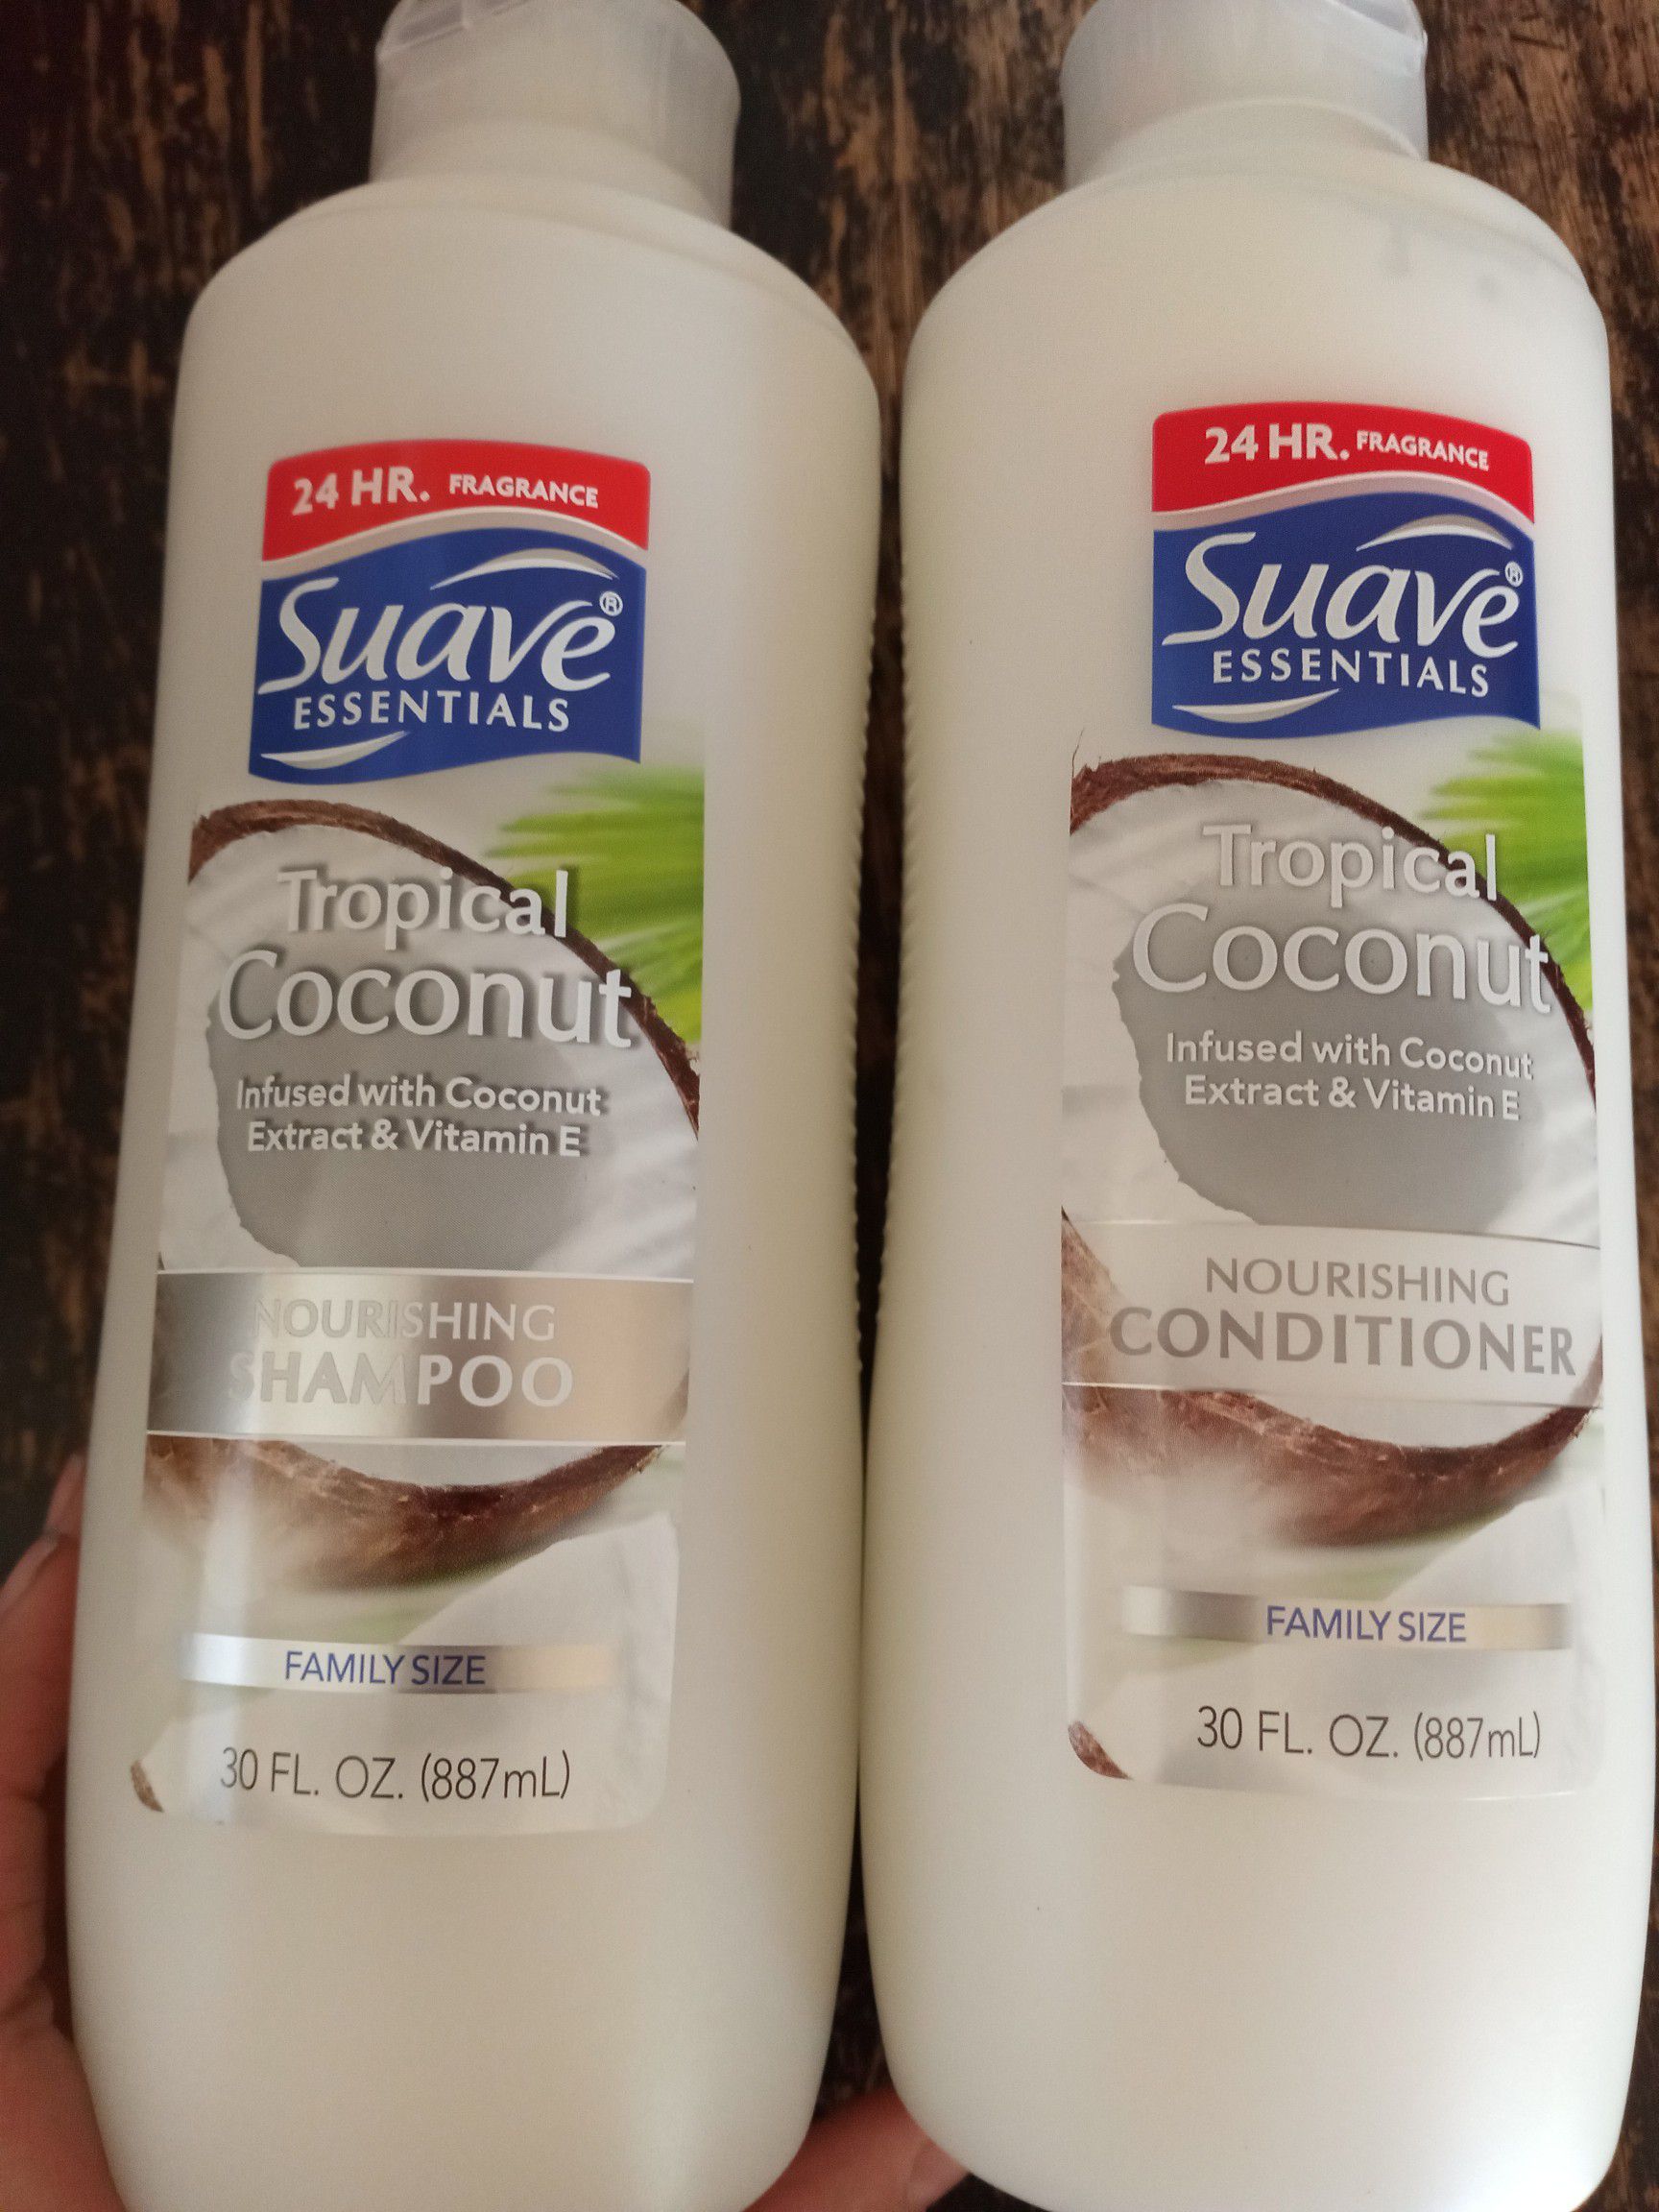 Suave shampoo and conditioner